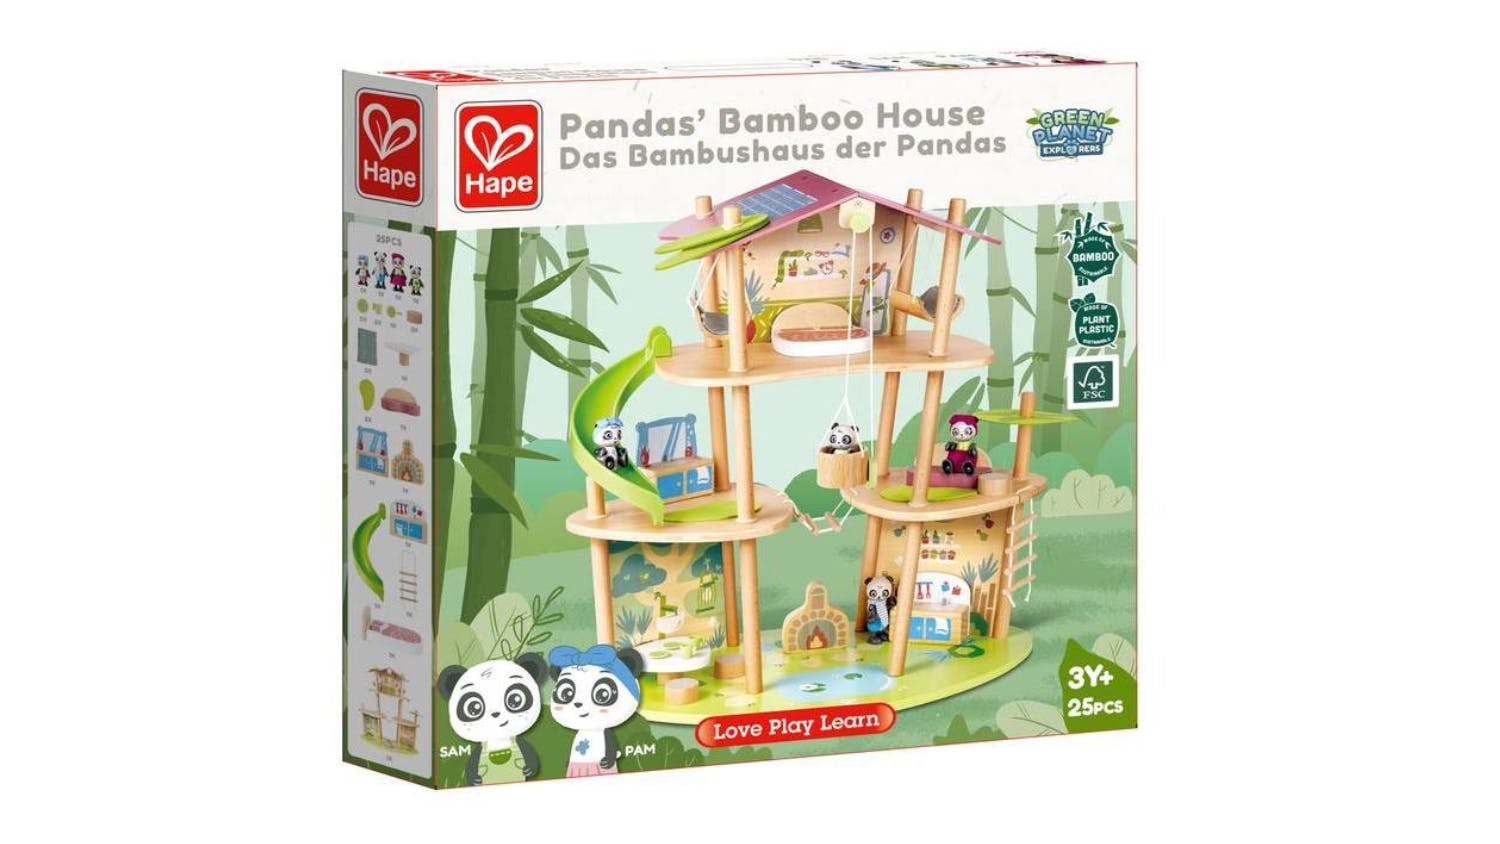 Hape "Green Planet" Panda's Bamboo House Playset